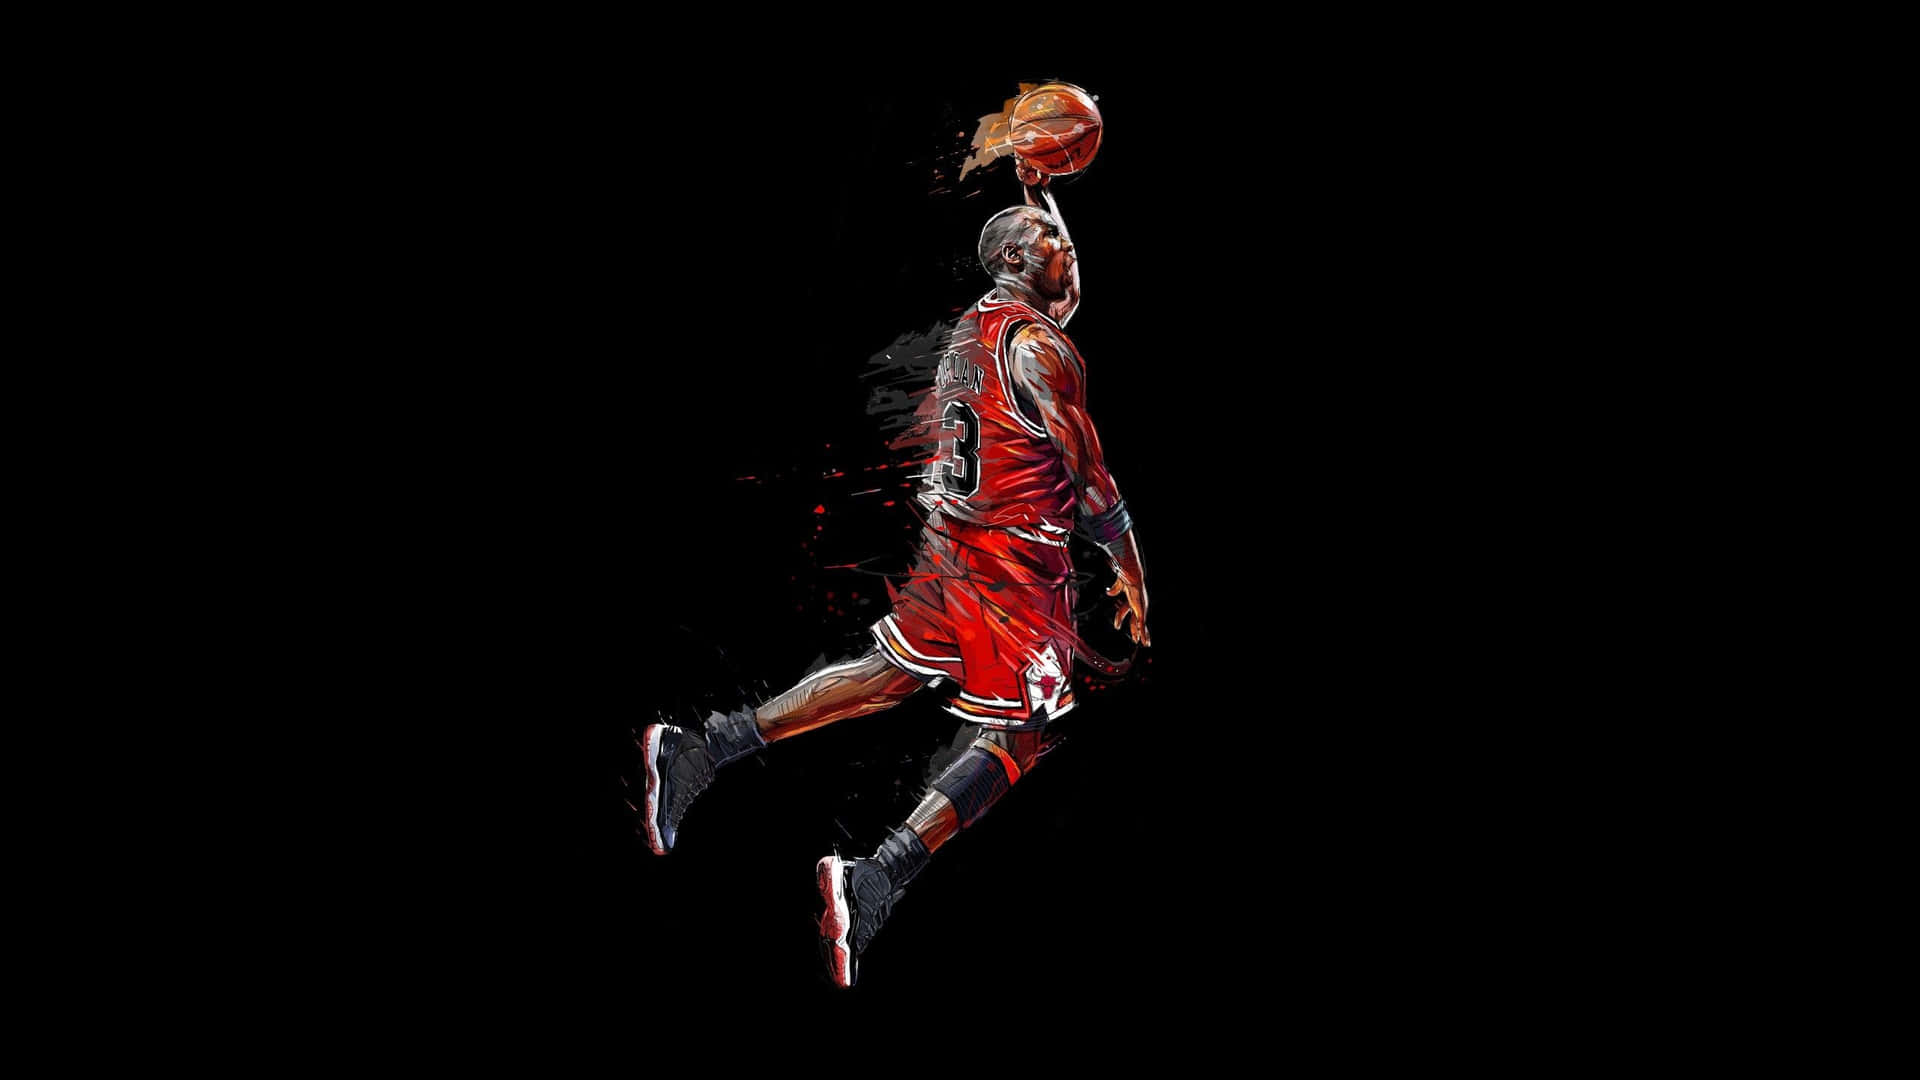 Dynamic Basketball Player Artwork Wallpaper